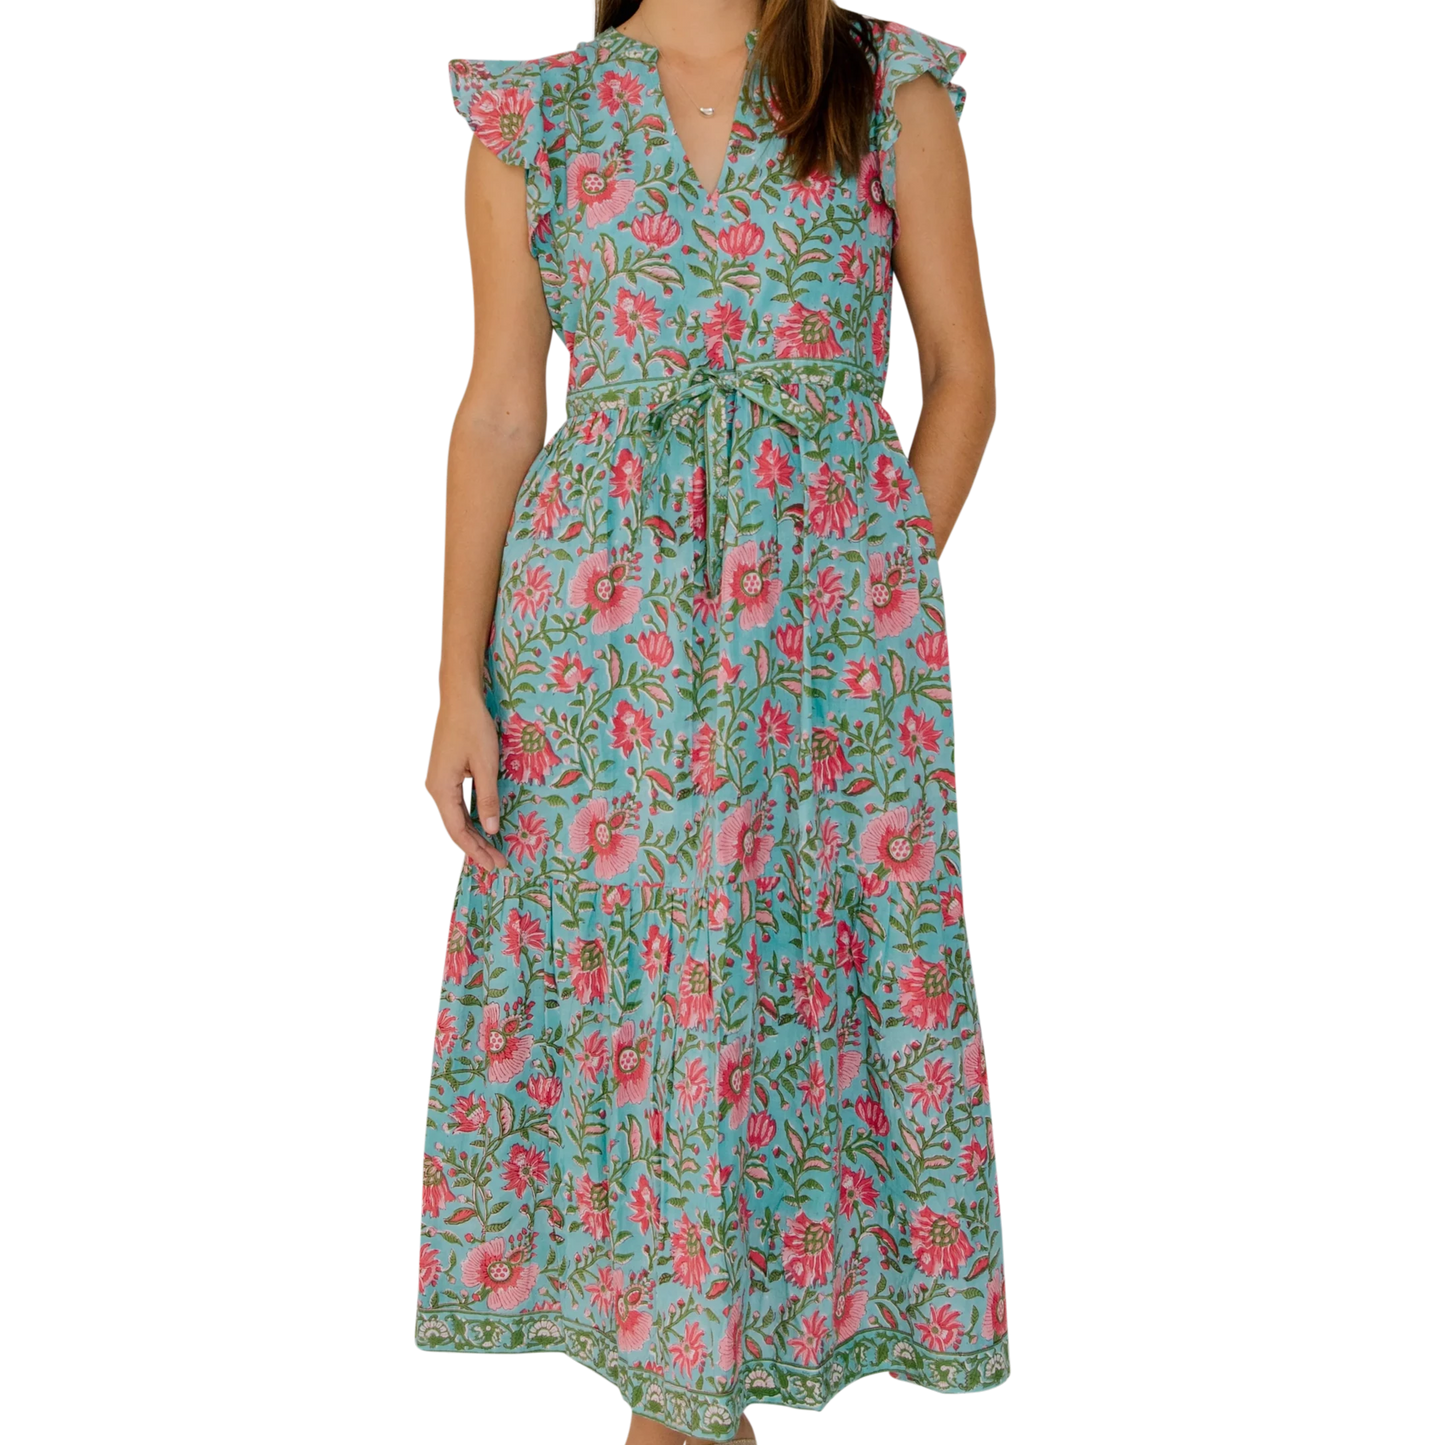 Charleston Shoe Co. Aubrey Dress - Turquoise & Pink Floral